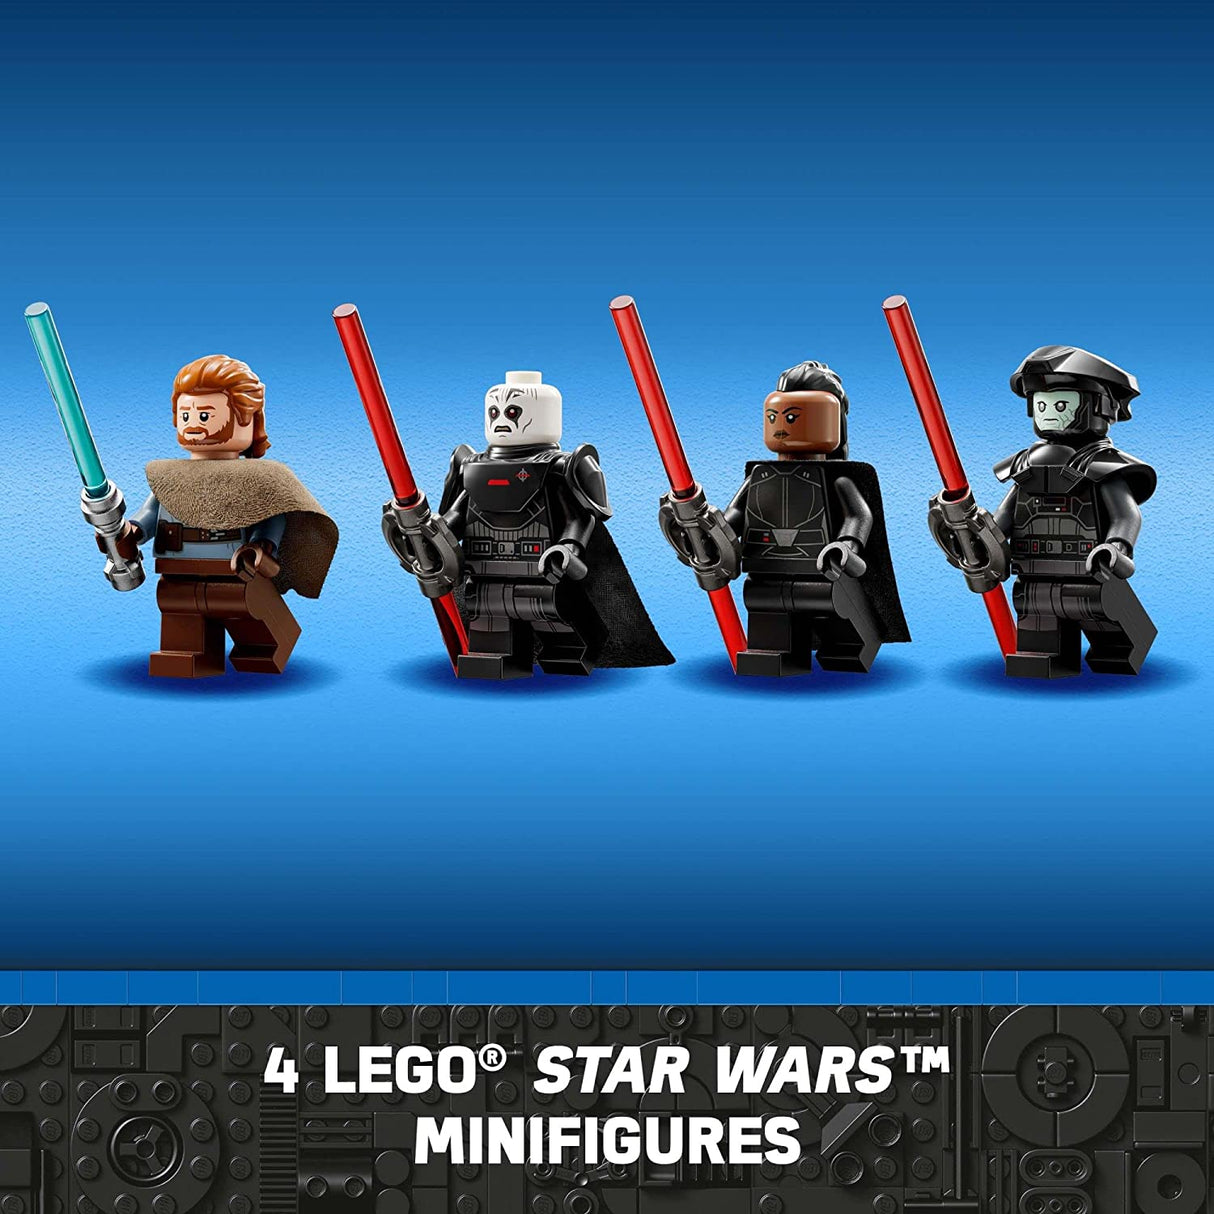 LEGO Star Wars: OBI-Wan Kenobi Inquisitor Transport Scythe 75336  (924 piezas)